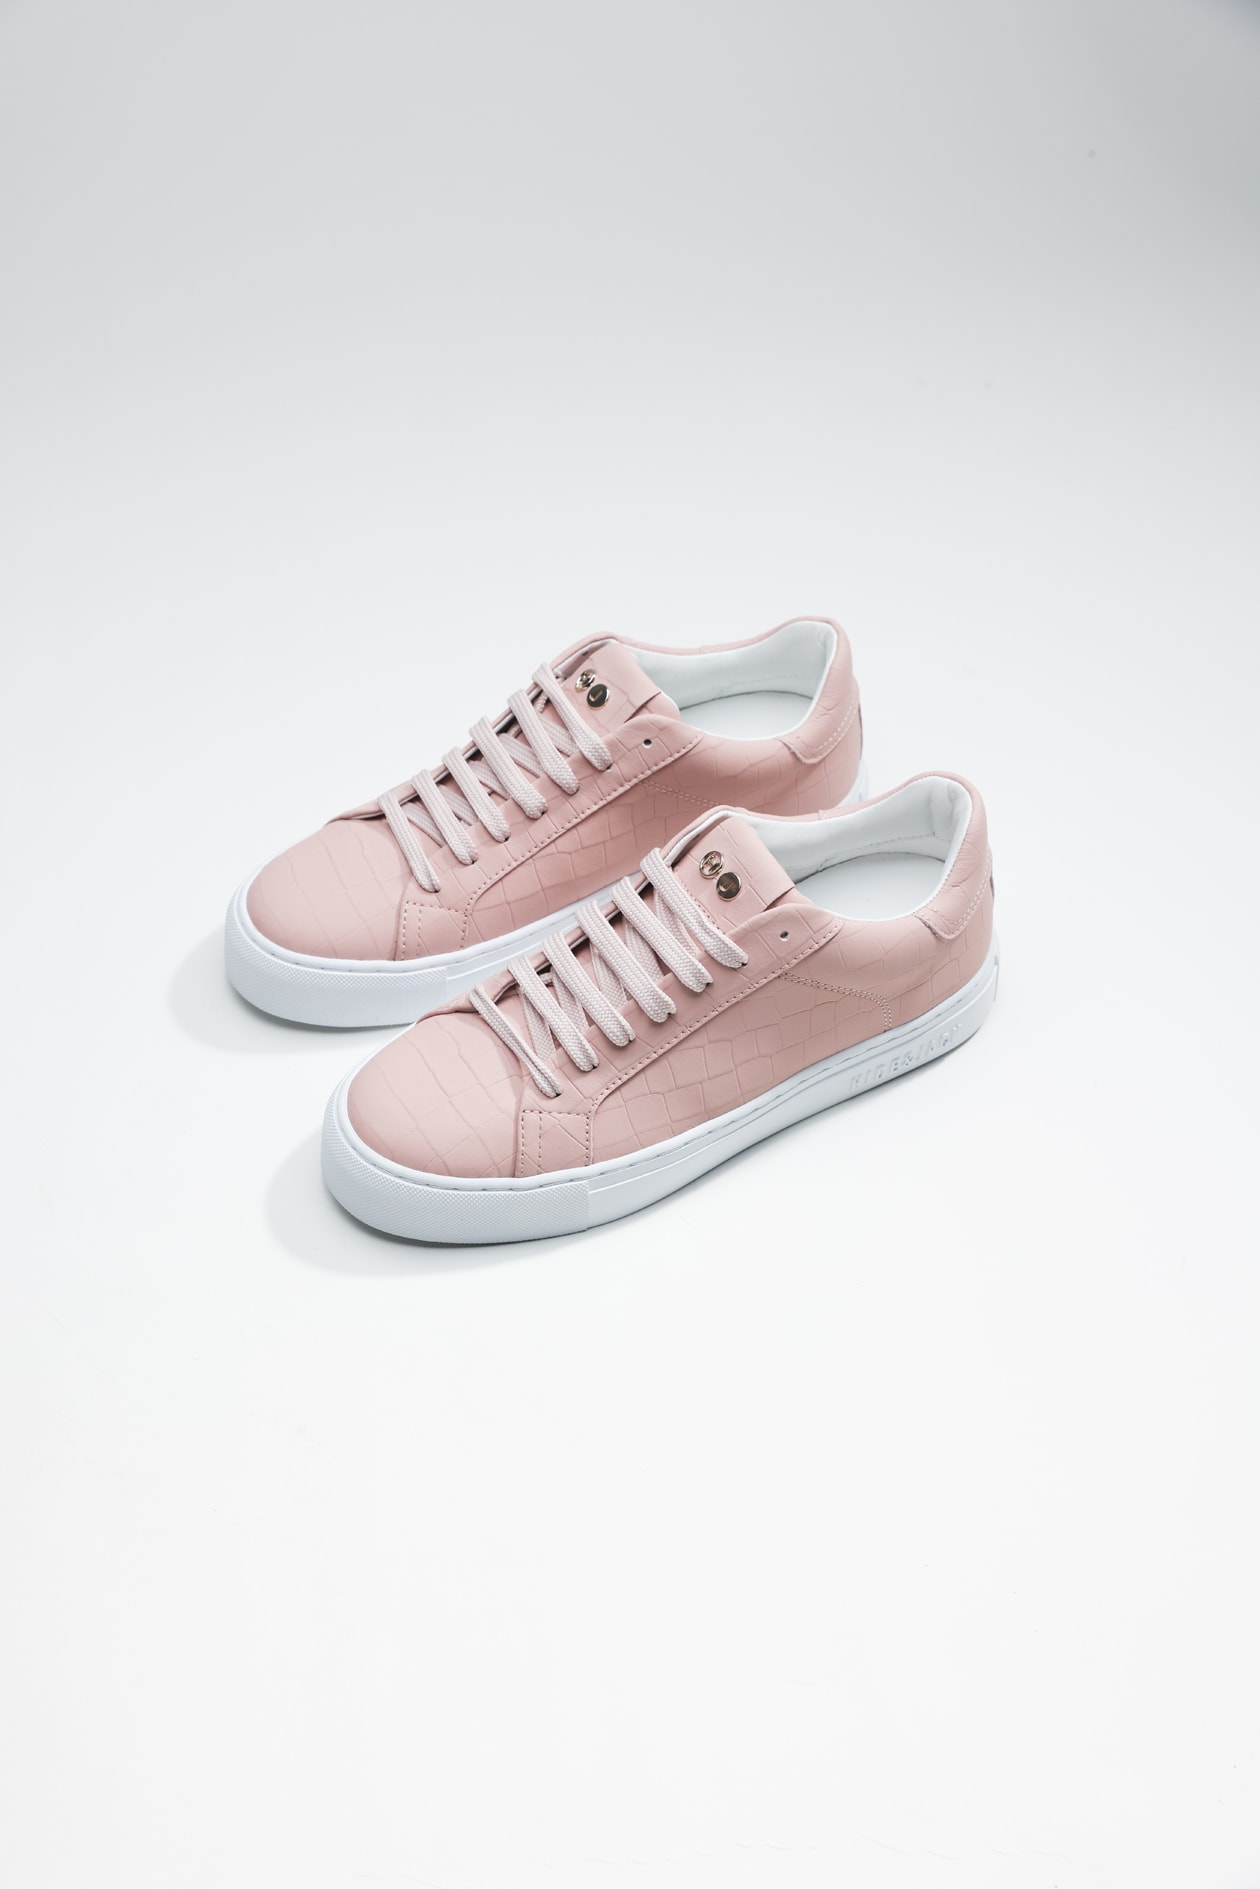 Hide & Jack Low Top Sneaker - Essence Pink White